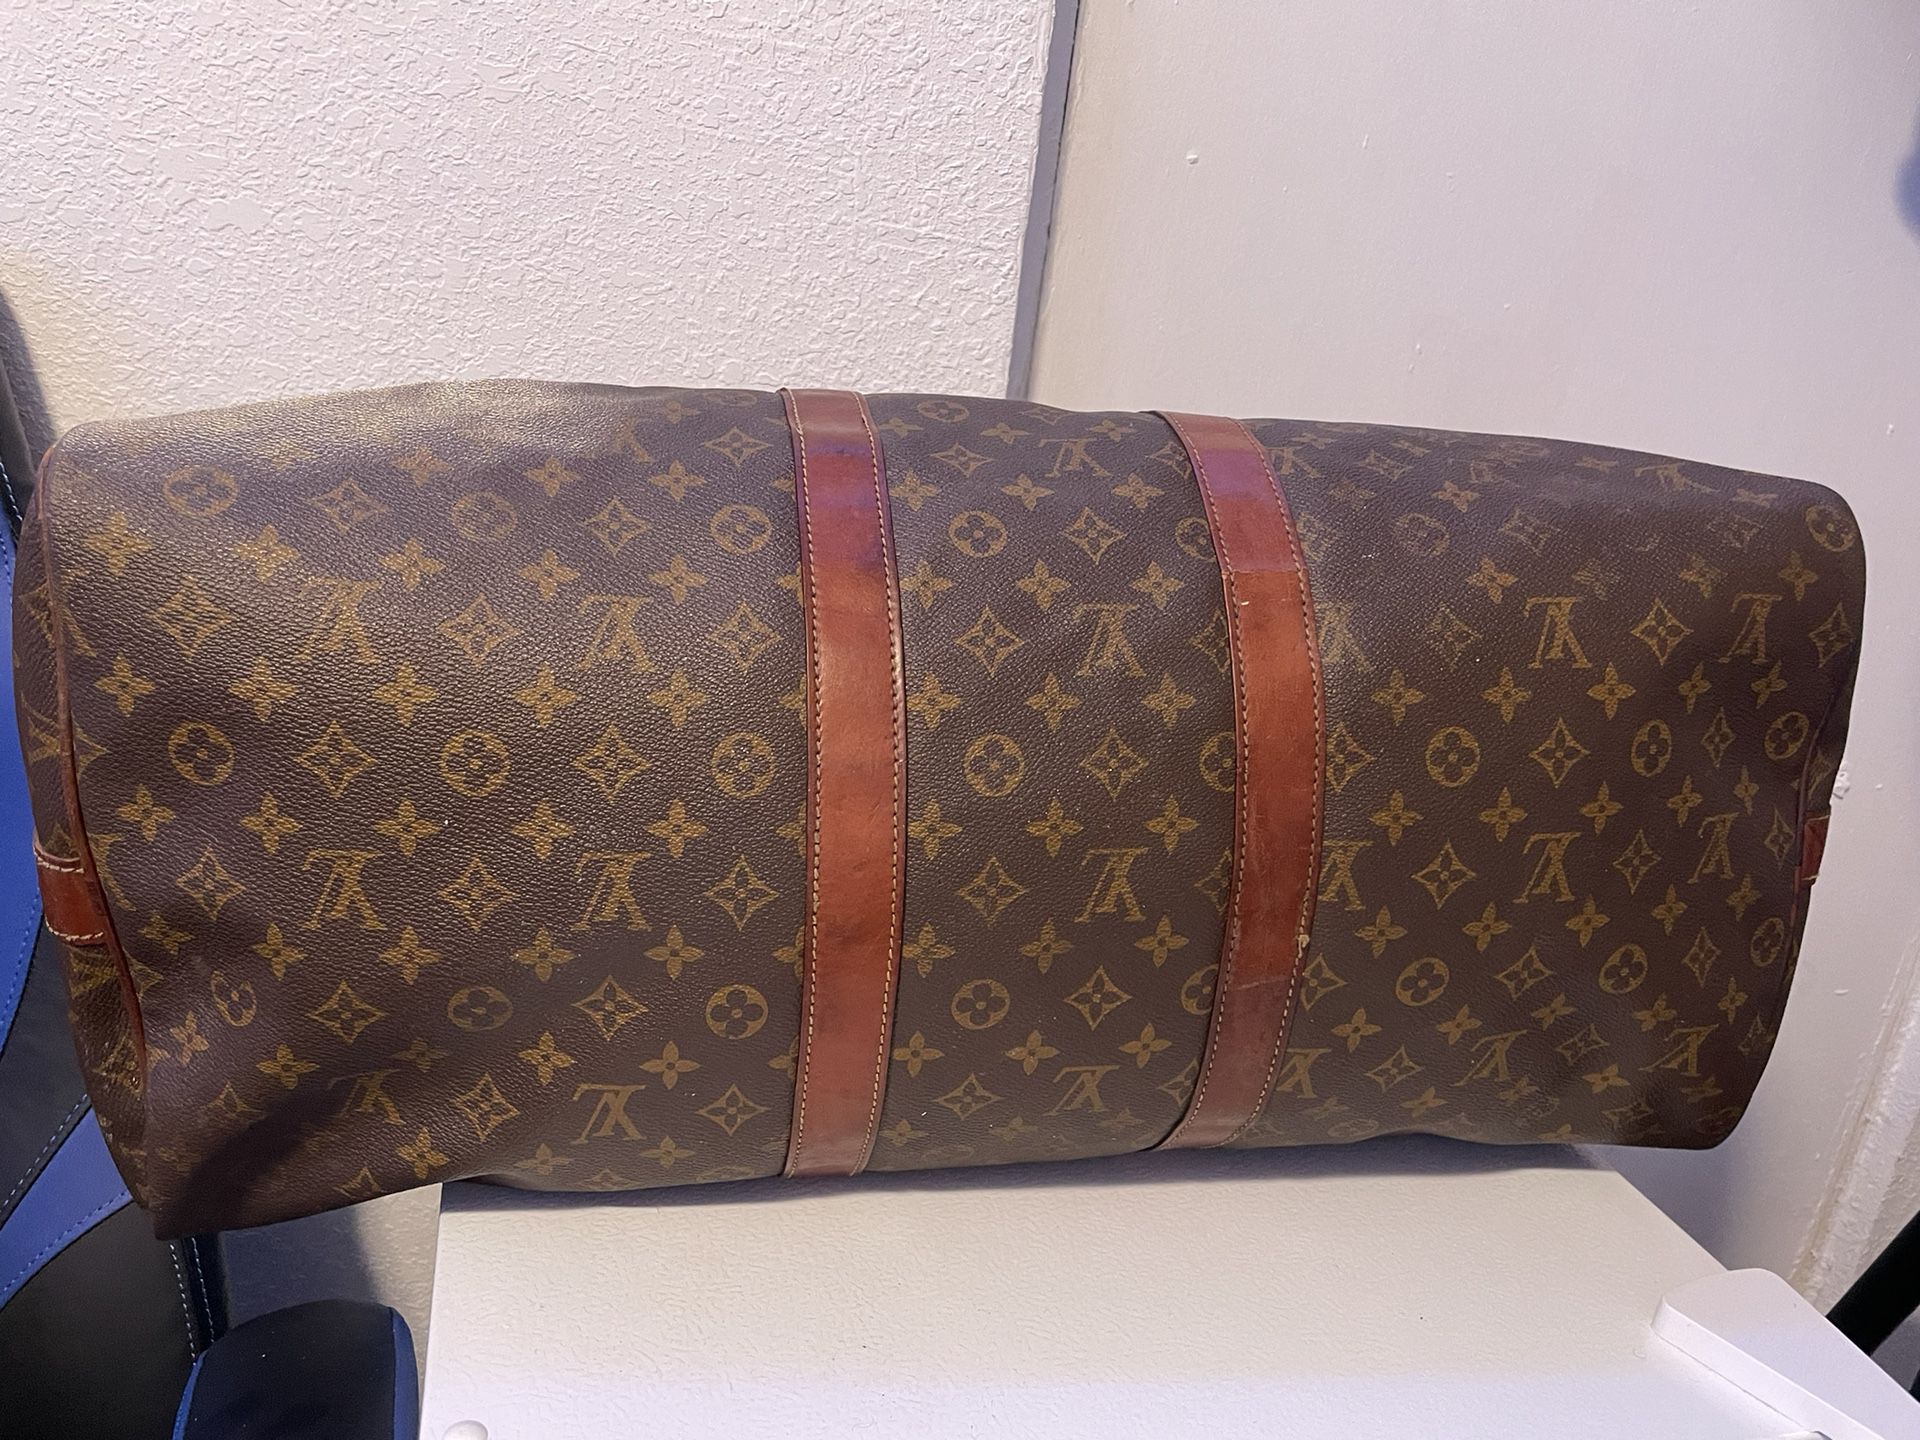 Authentic Louis Vuitton Duffle Bag for Sale in Fort Lauderdale, FL